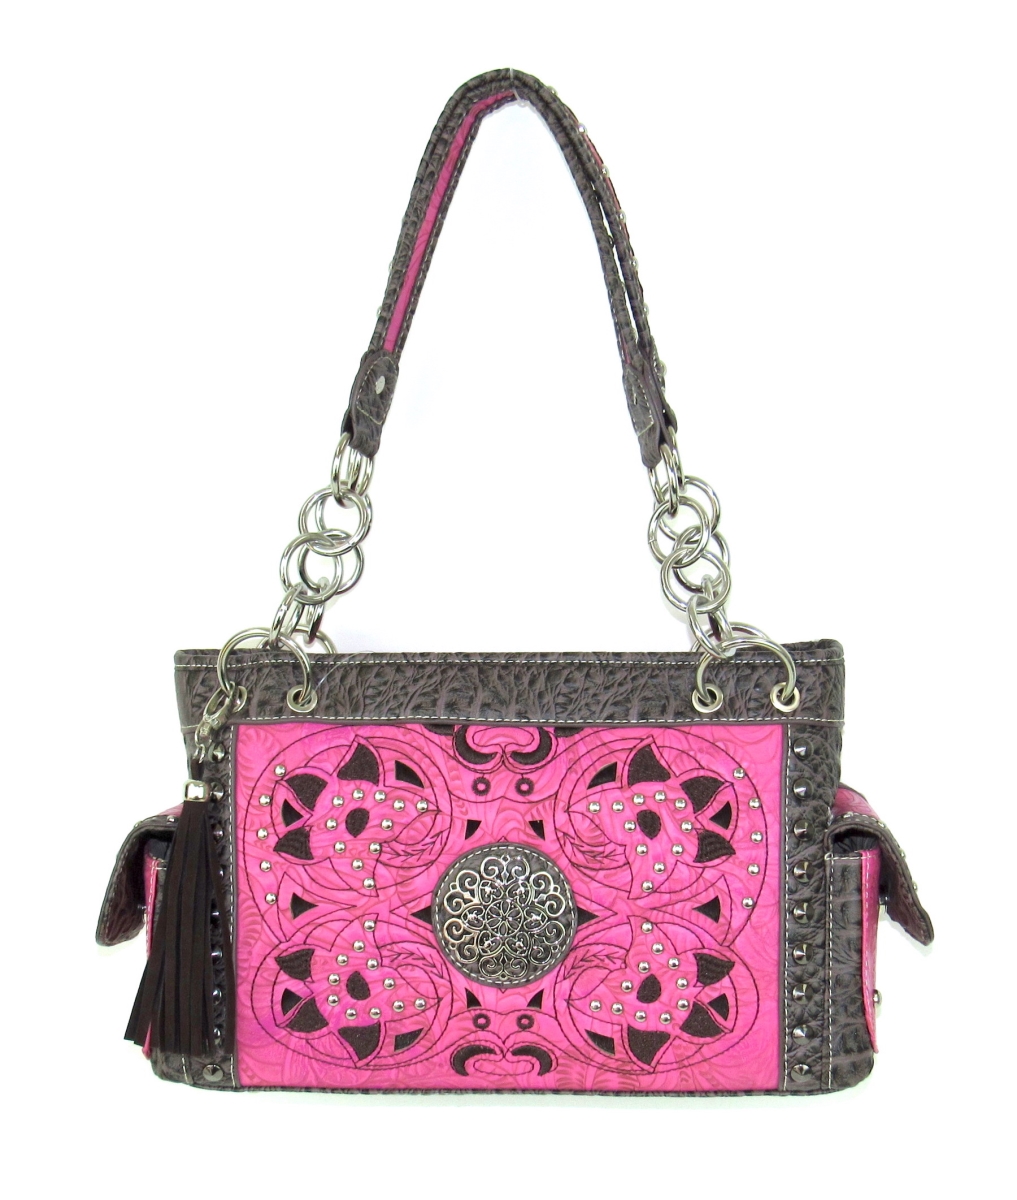 No.ni-893 Hpk Ladies Faux Leather Satchel Tooled Handbag, Hot Pink